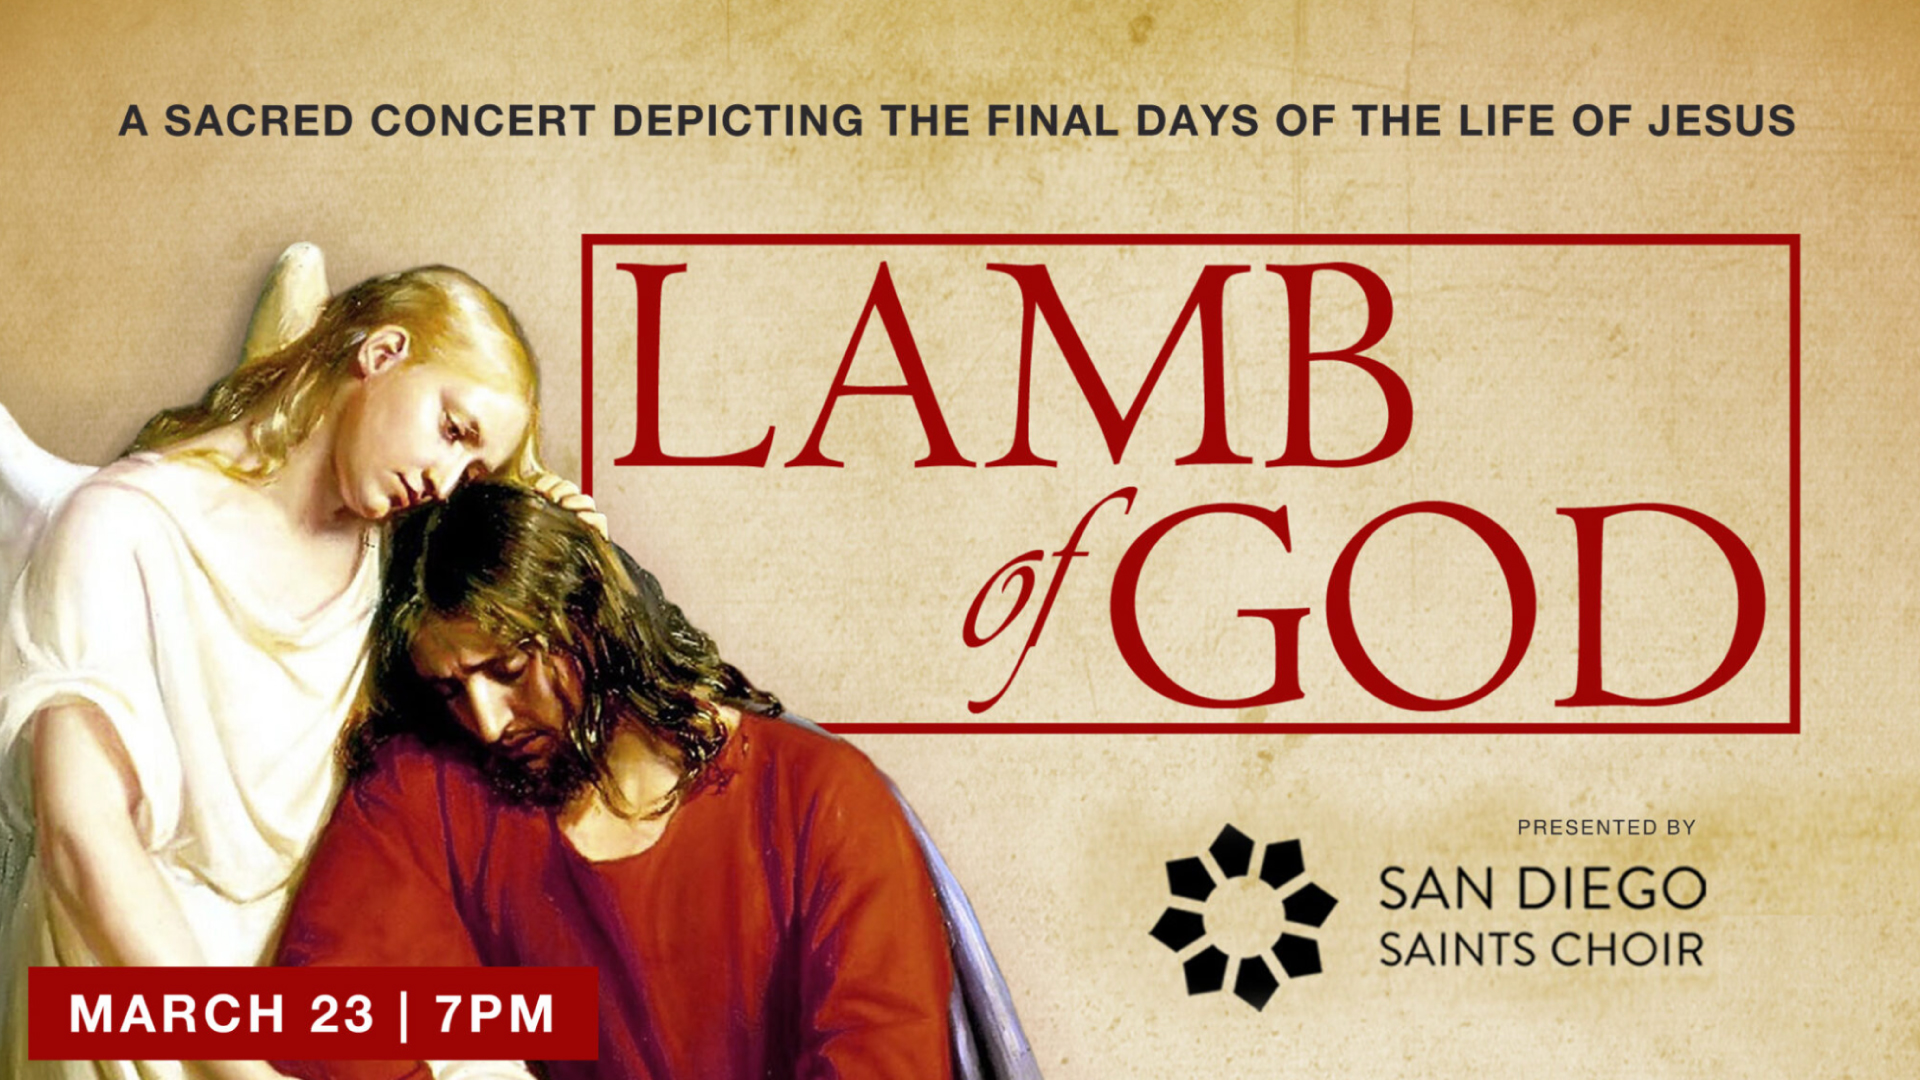 San Diego Saints Choir – Lamb of God